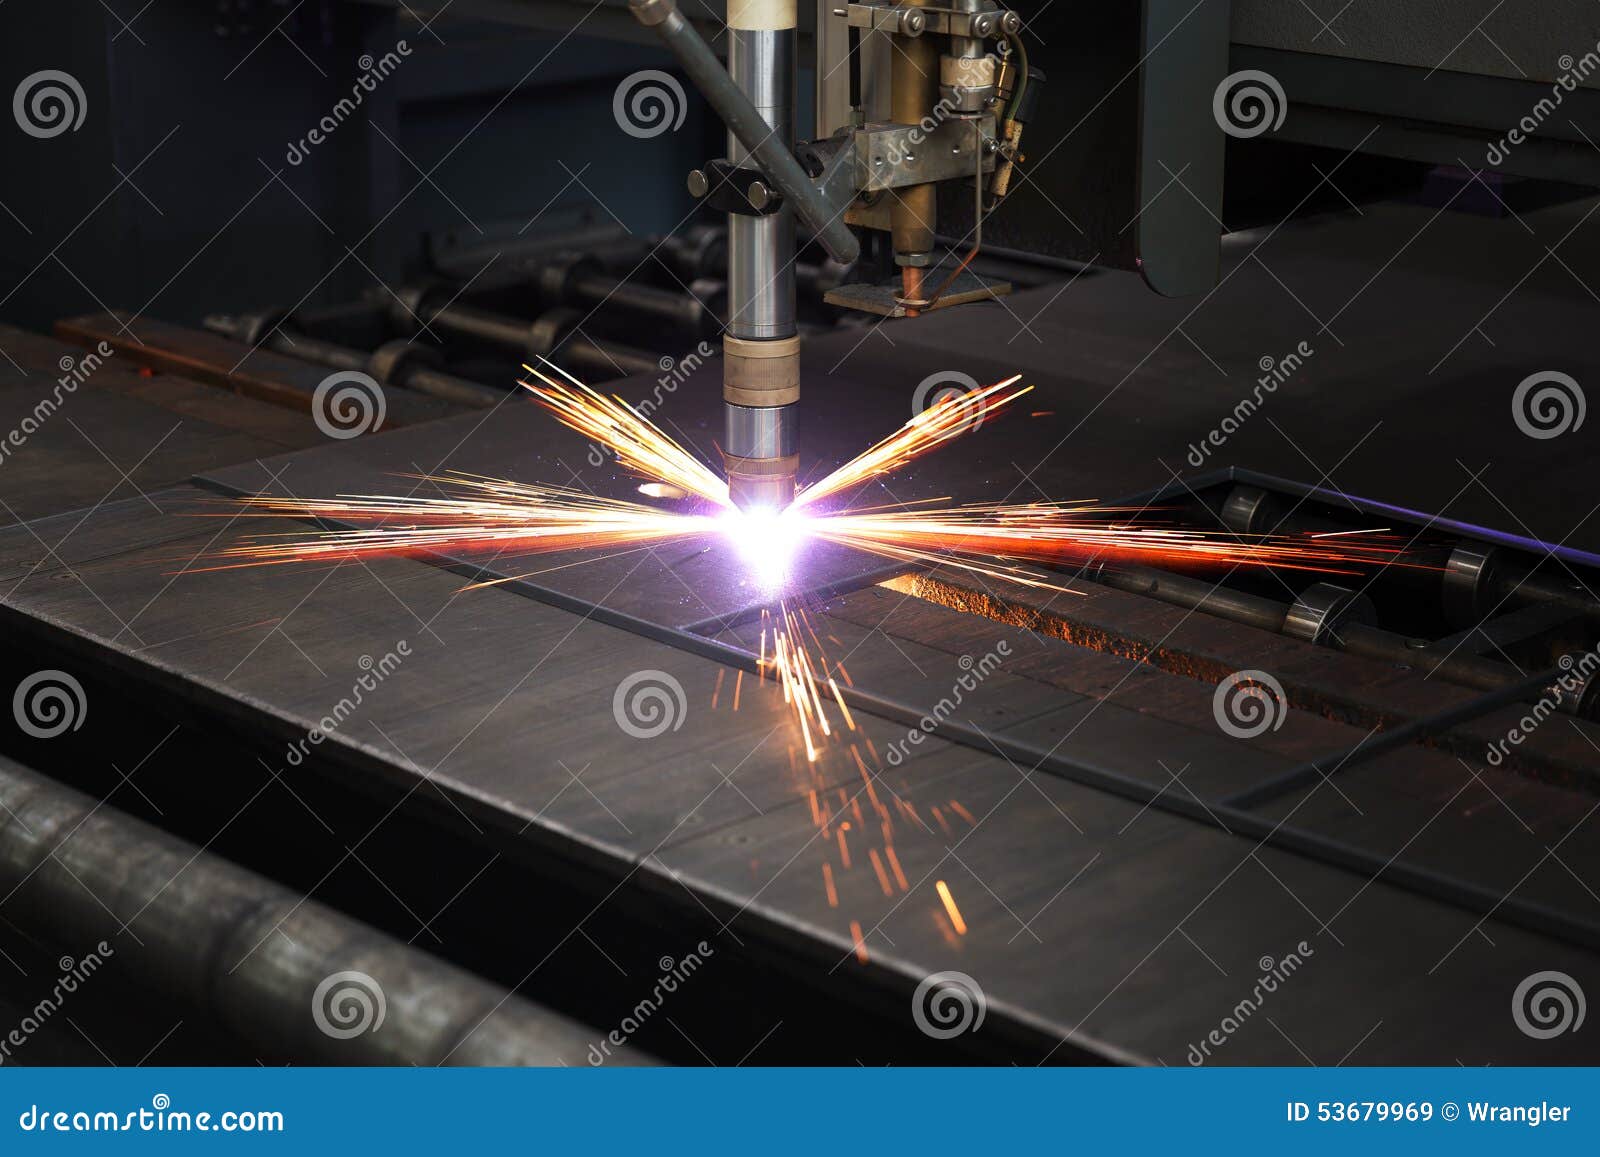 industrial cnc plasma cutting of metal plate